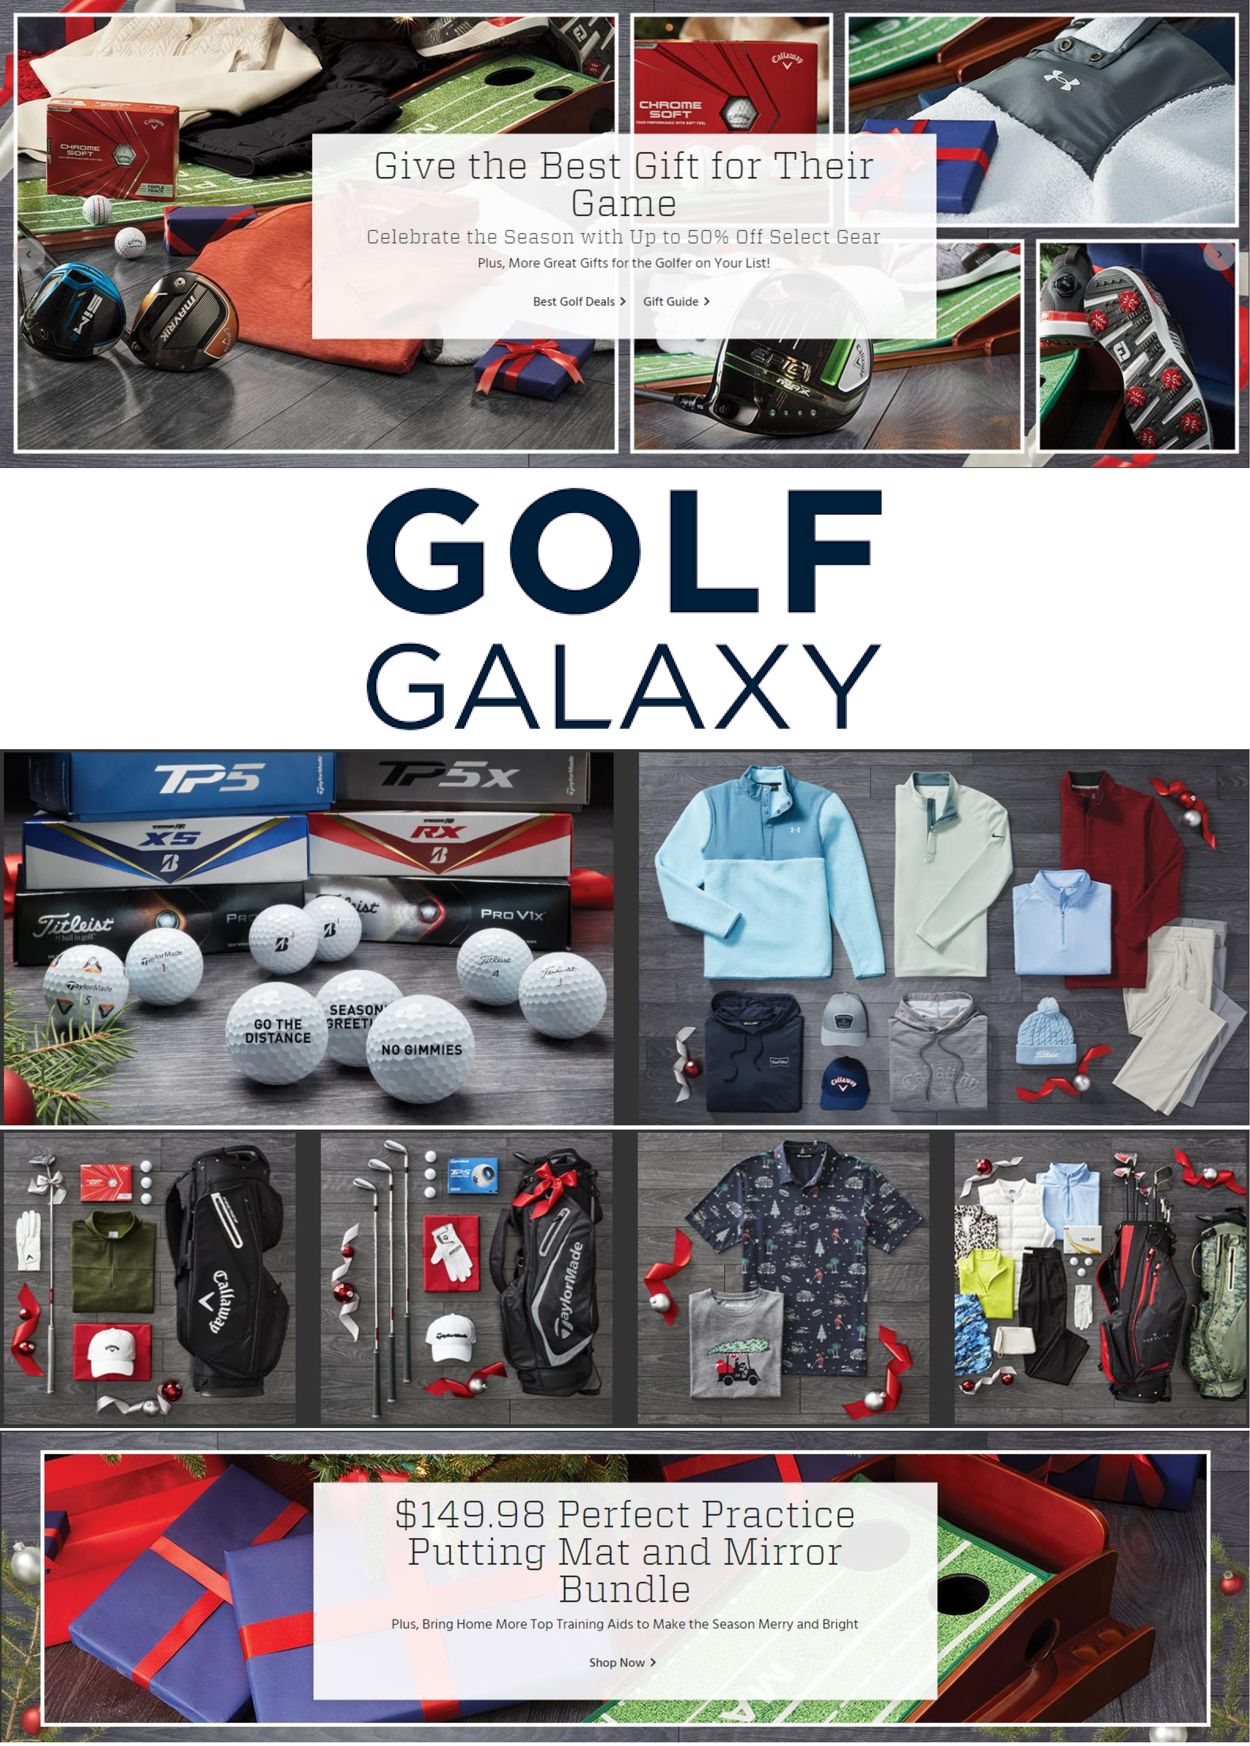 Golf Galaxy Ad from 11/17/2021